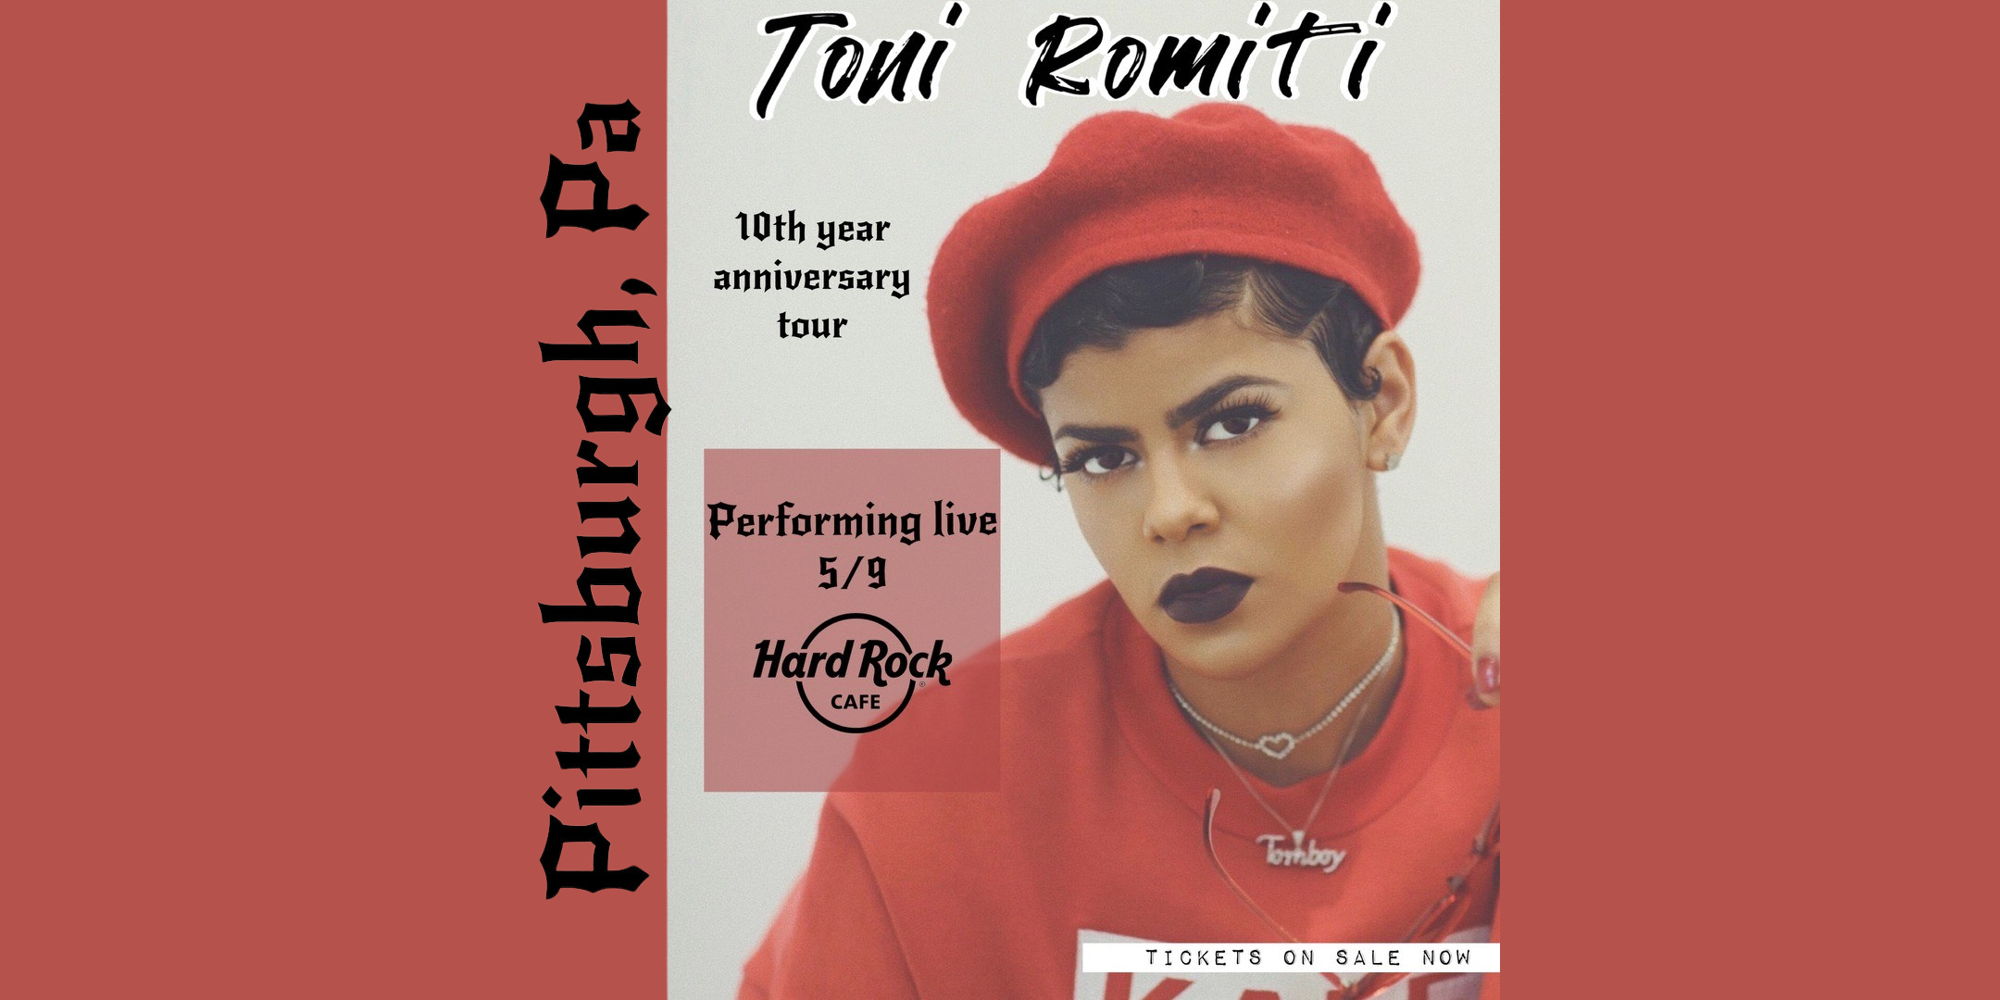 Toni Romiti: 10 Year Anniversary Tour promotional image